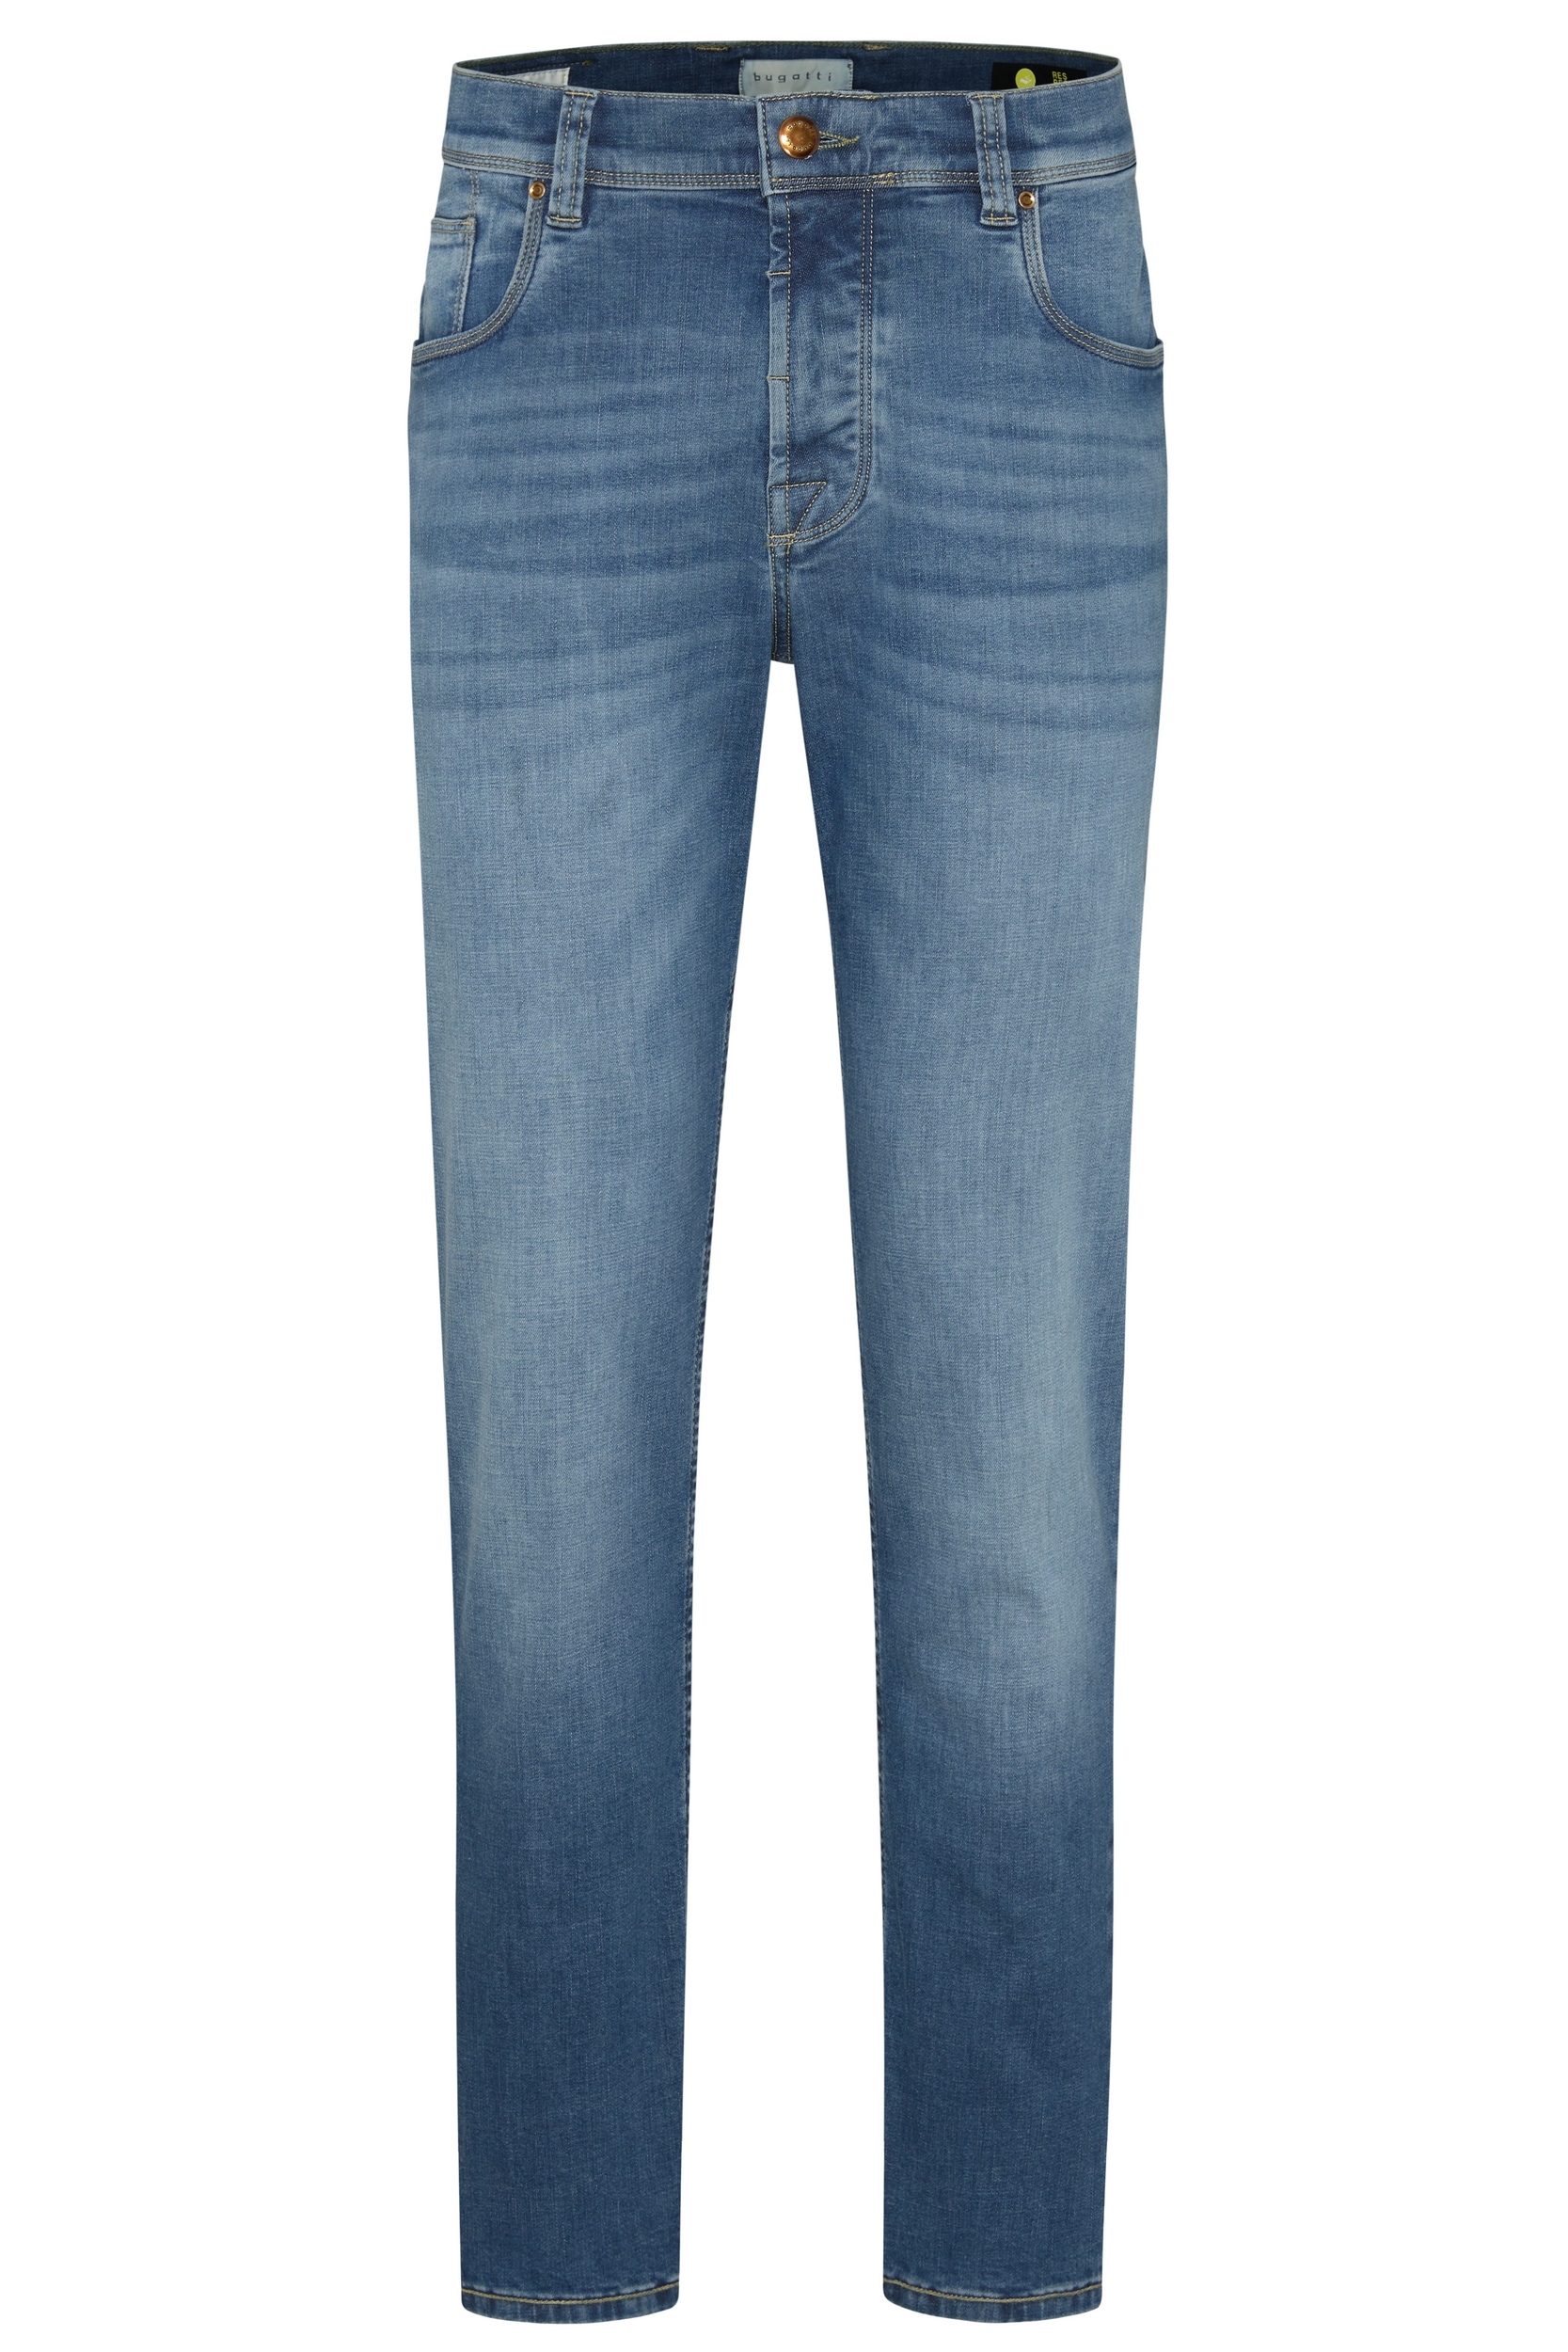 bugatti 5-Pocket-Jeans von bugatti